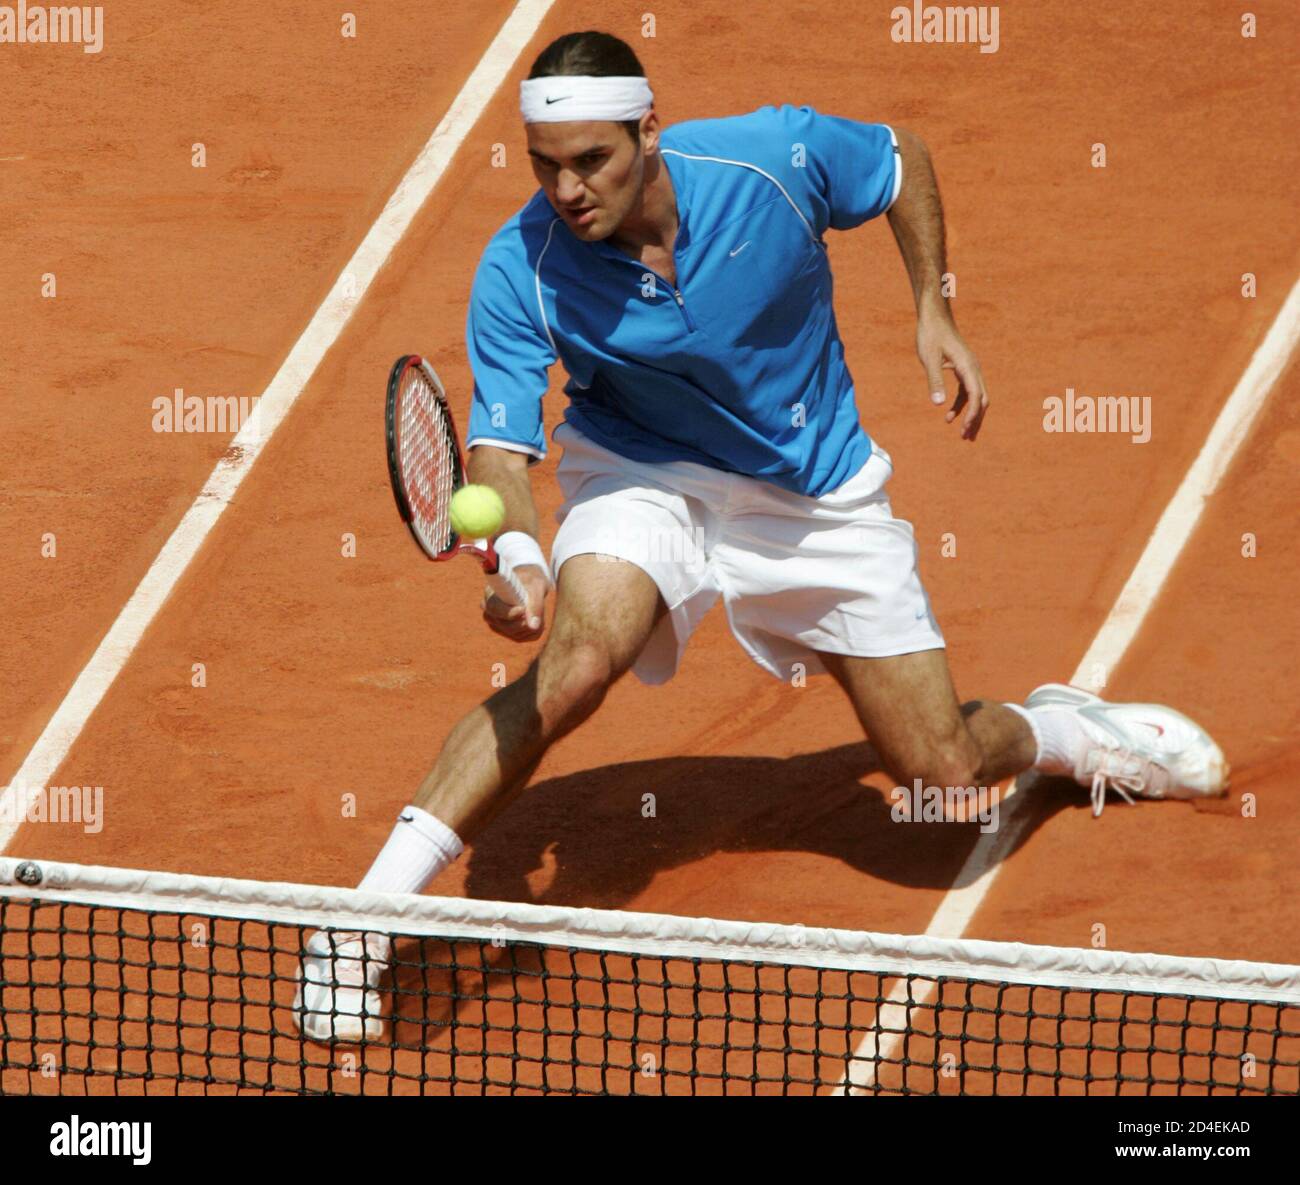 Roger Federer of Switzerland returns a forehand [to Gustavo Kuerten of  Brazil] in the French Open tennis tournament at Roland Garros stadium in  Paris, May 29, 2004. [Kuerten taught the world's best